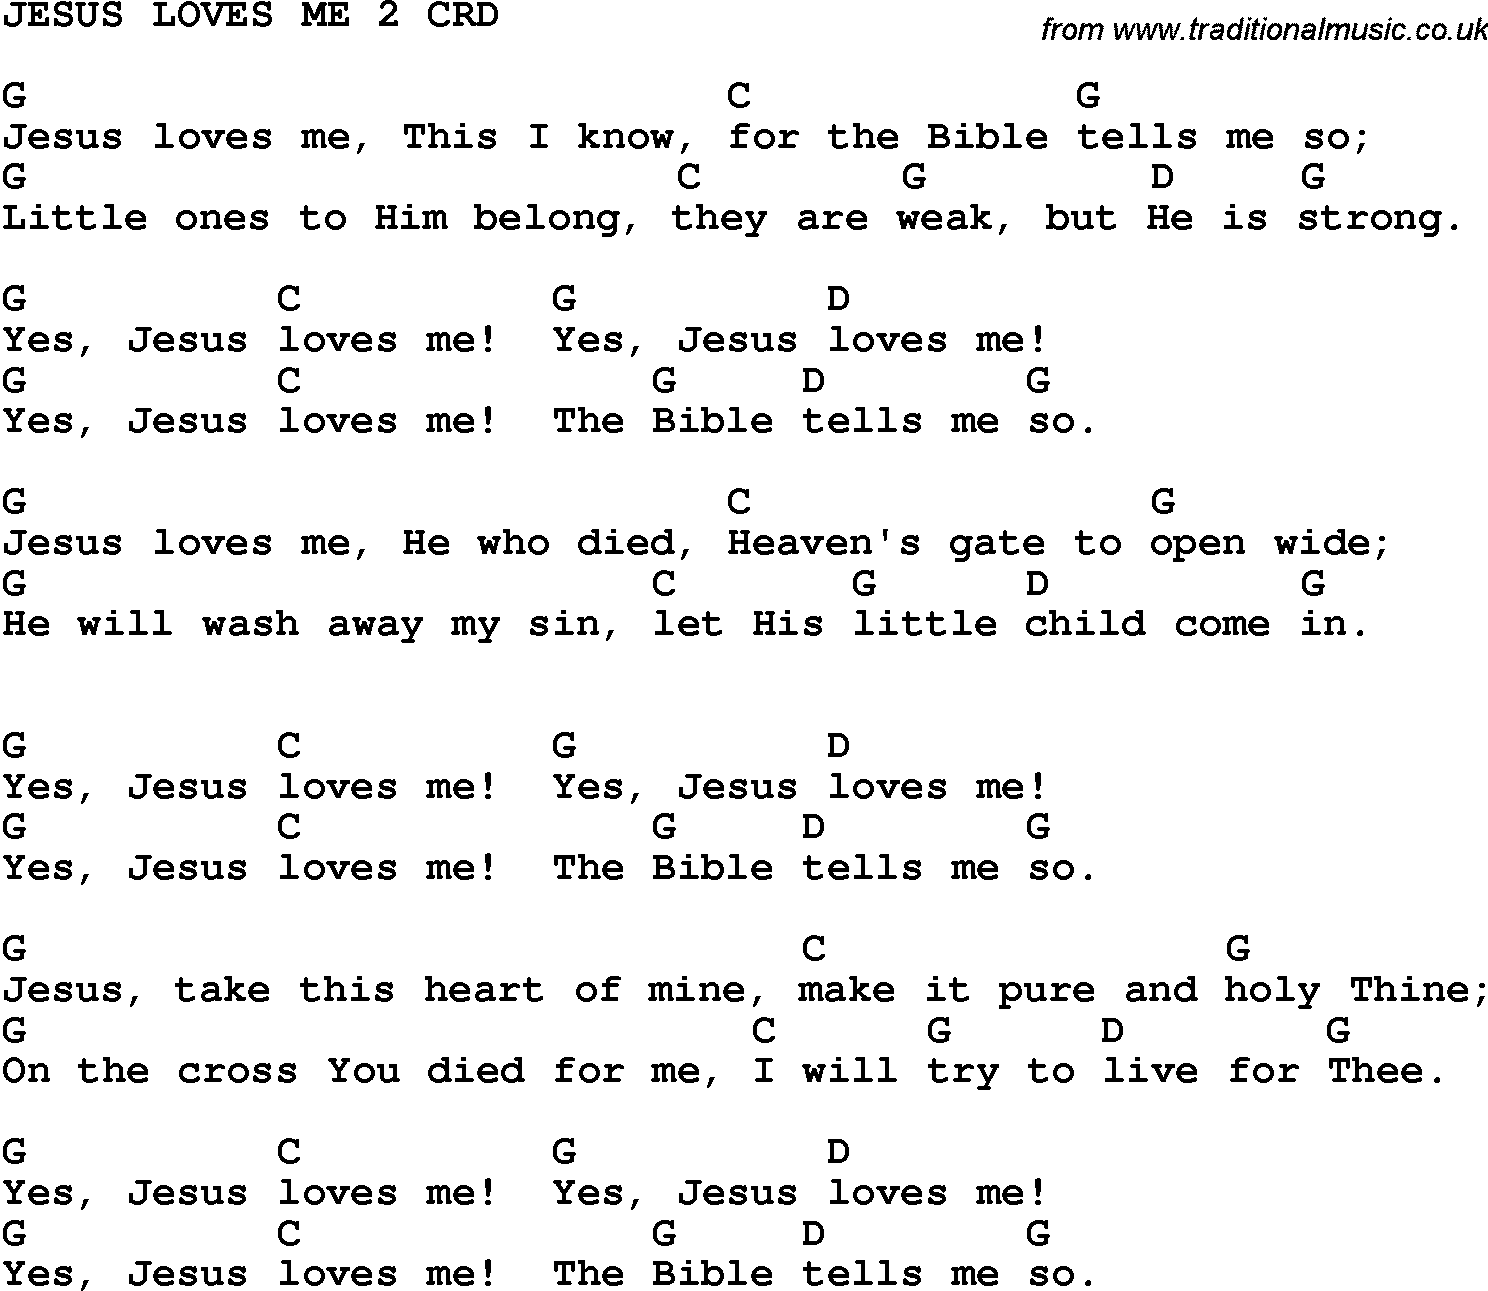 Christian Childrens Song: Jesus Loves Me 2 Lyrics And Chords